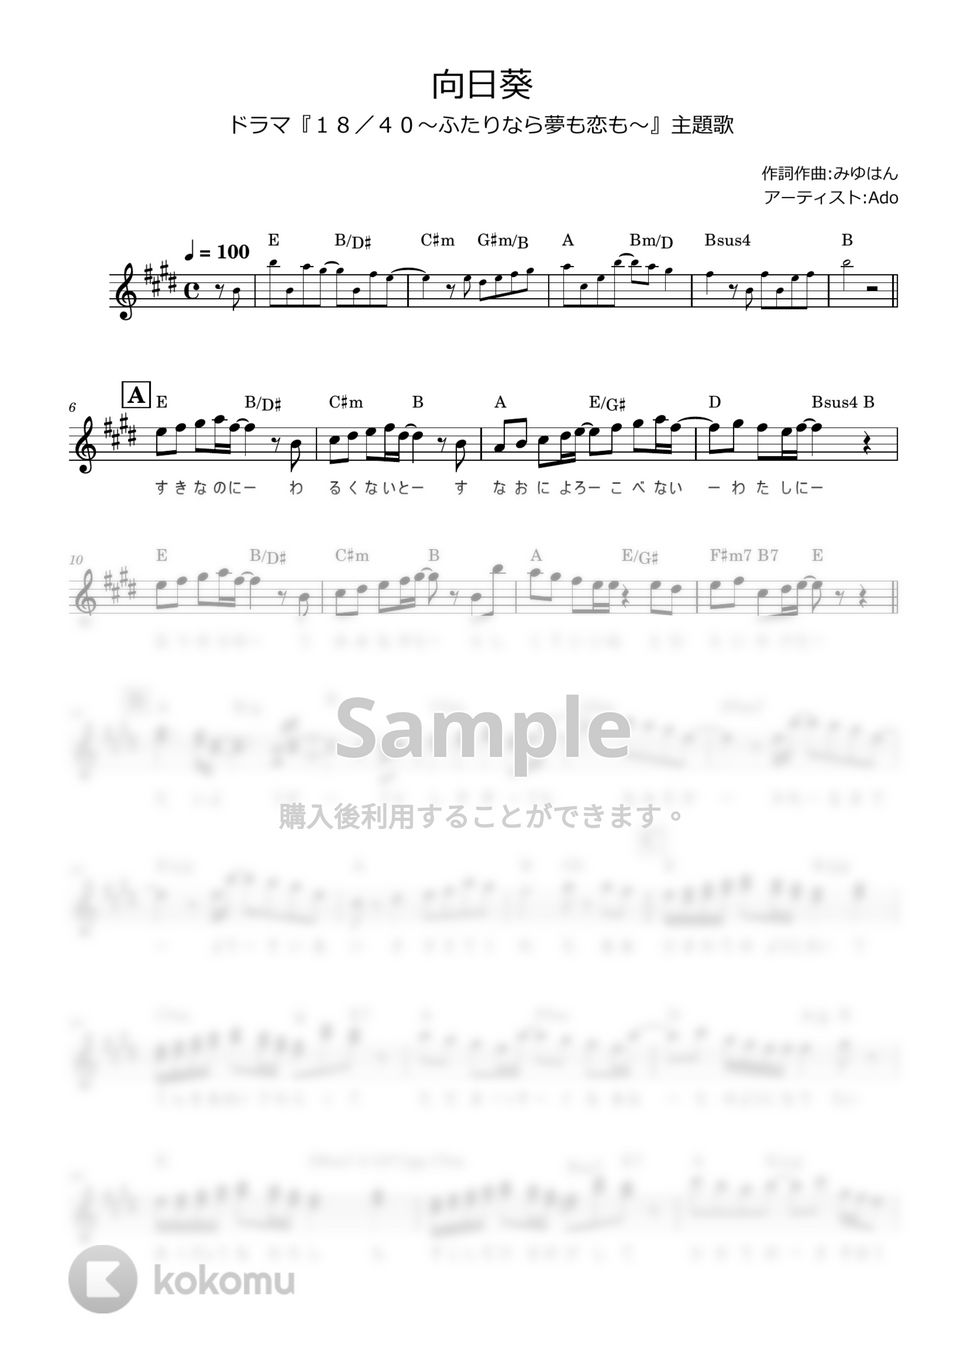 Ado - 向日葵 (メロディ譜/歌詞付き/コード付き) by reo piano